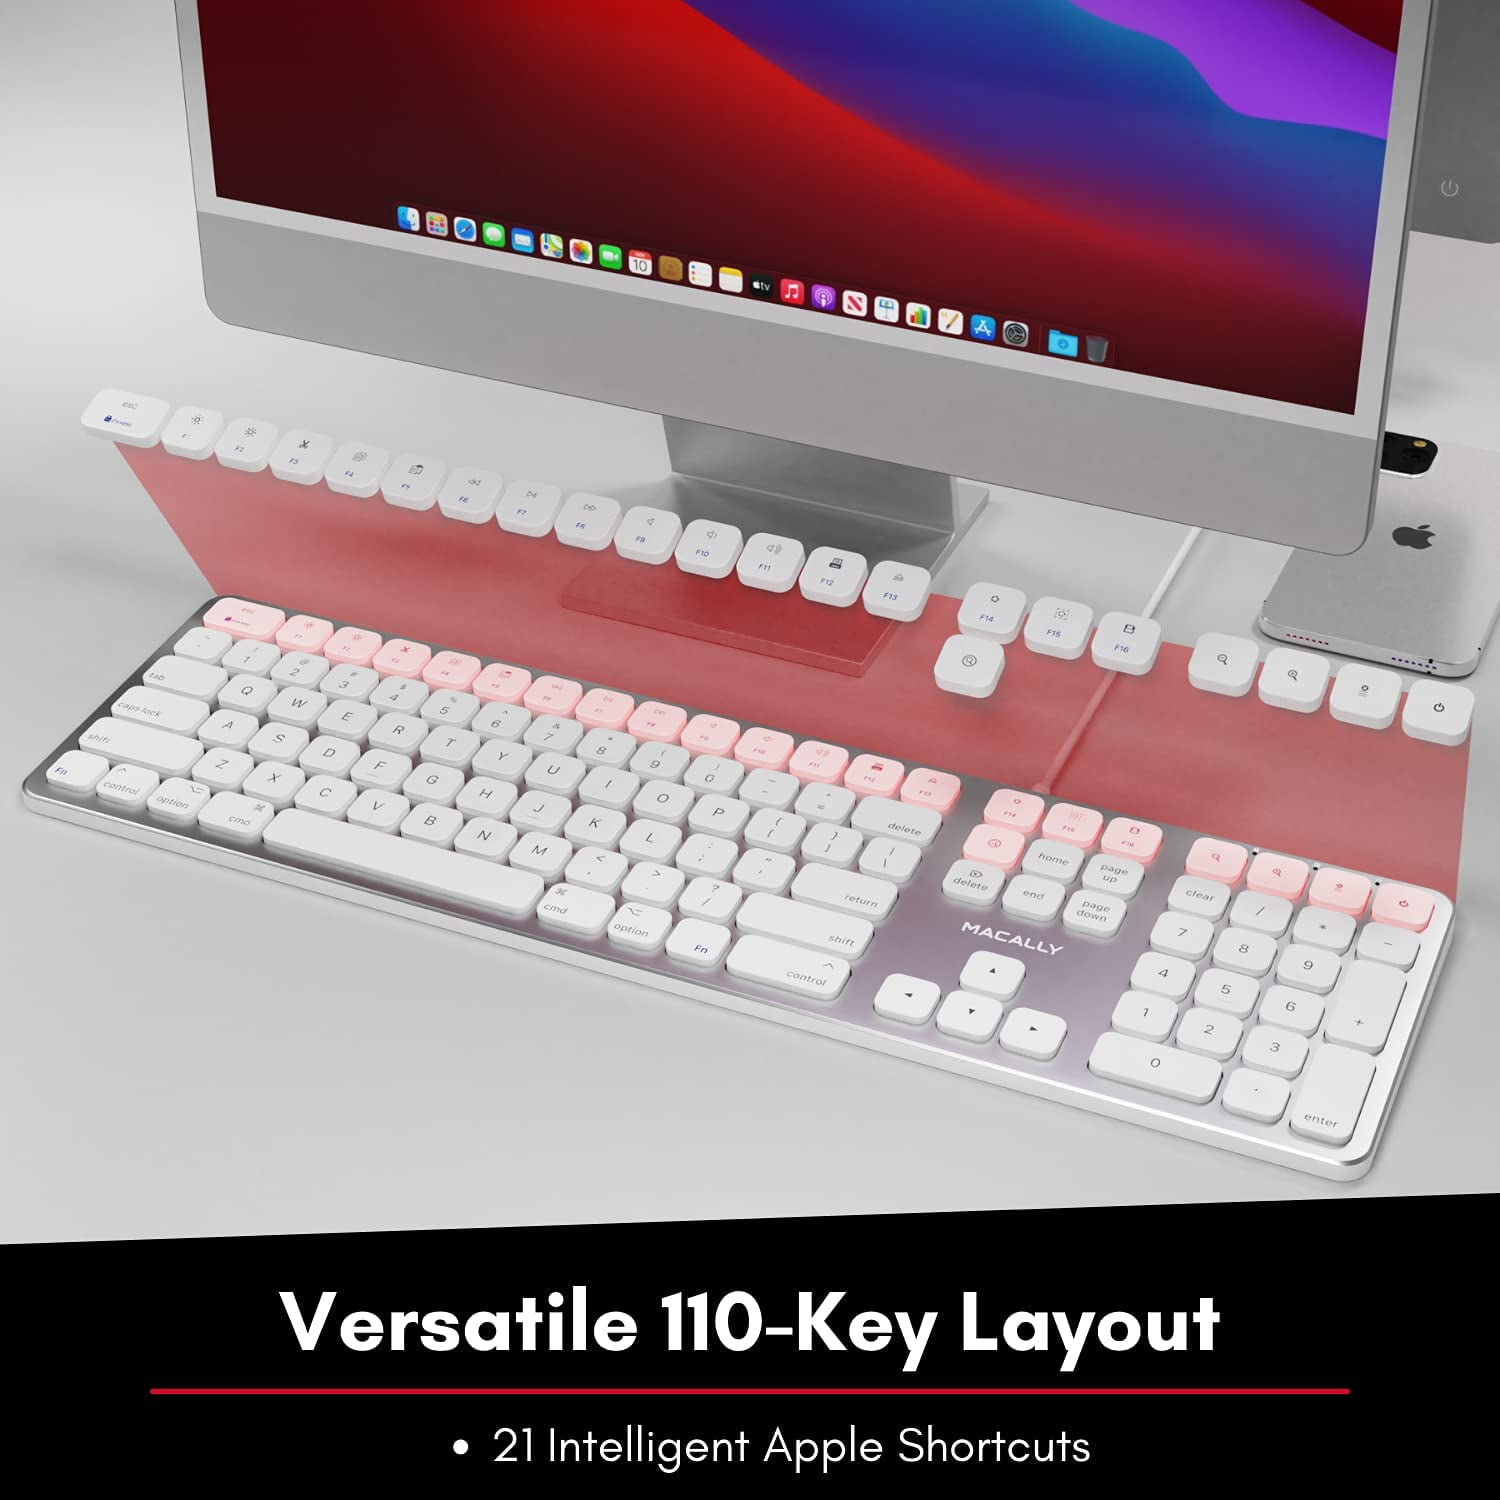  Aluminum USB Wired Keyboard with Numeric Keypad for Apple Mac  Pro, Mini Mac, iMac, iMac Pro, MacBook Pro/Air : Electronics